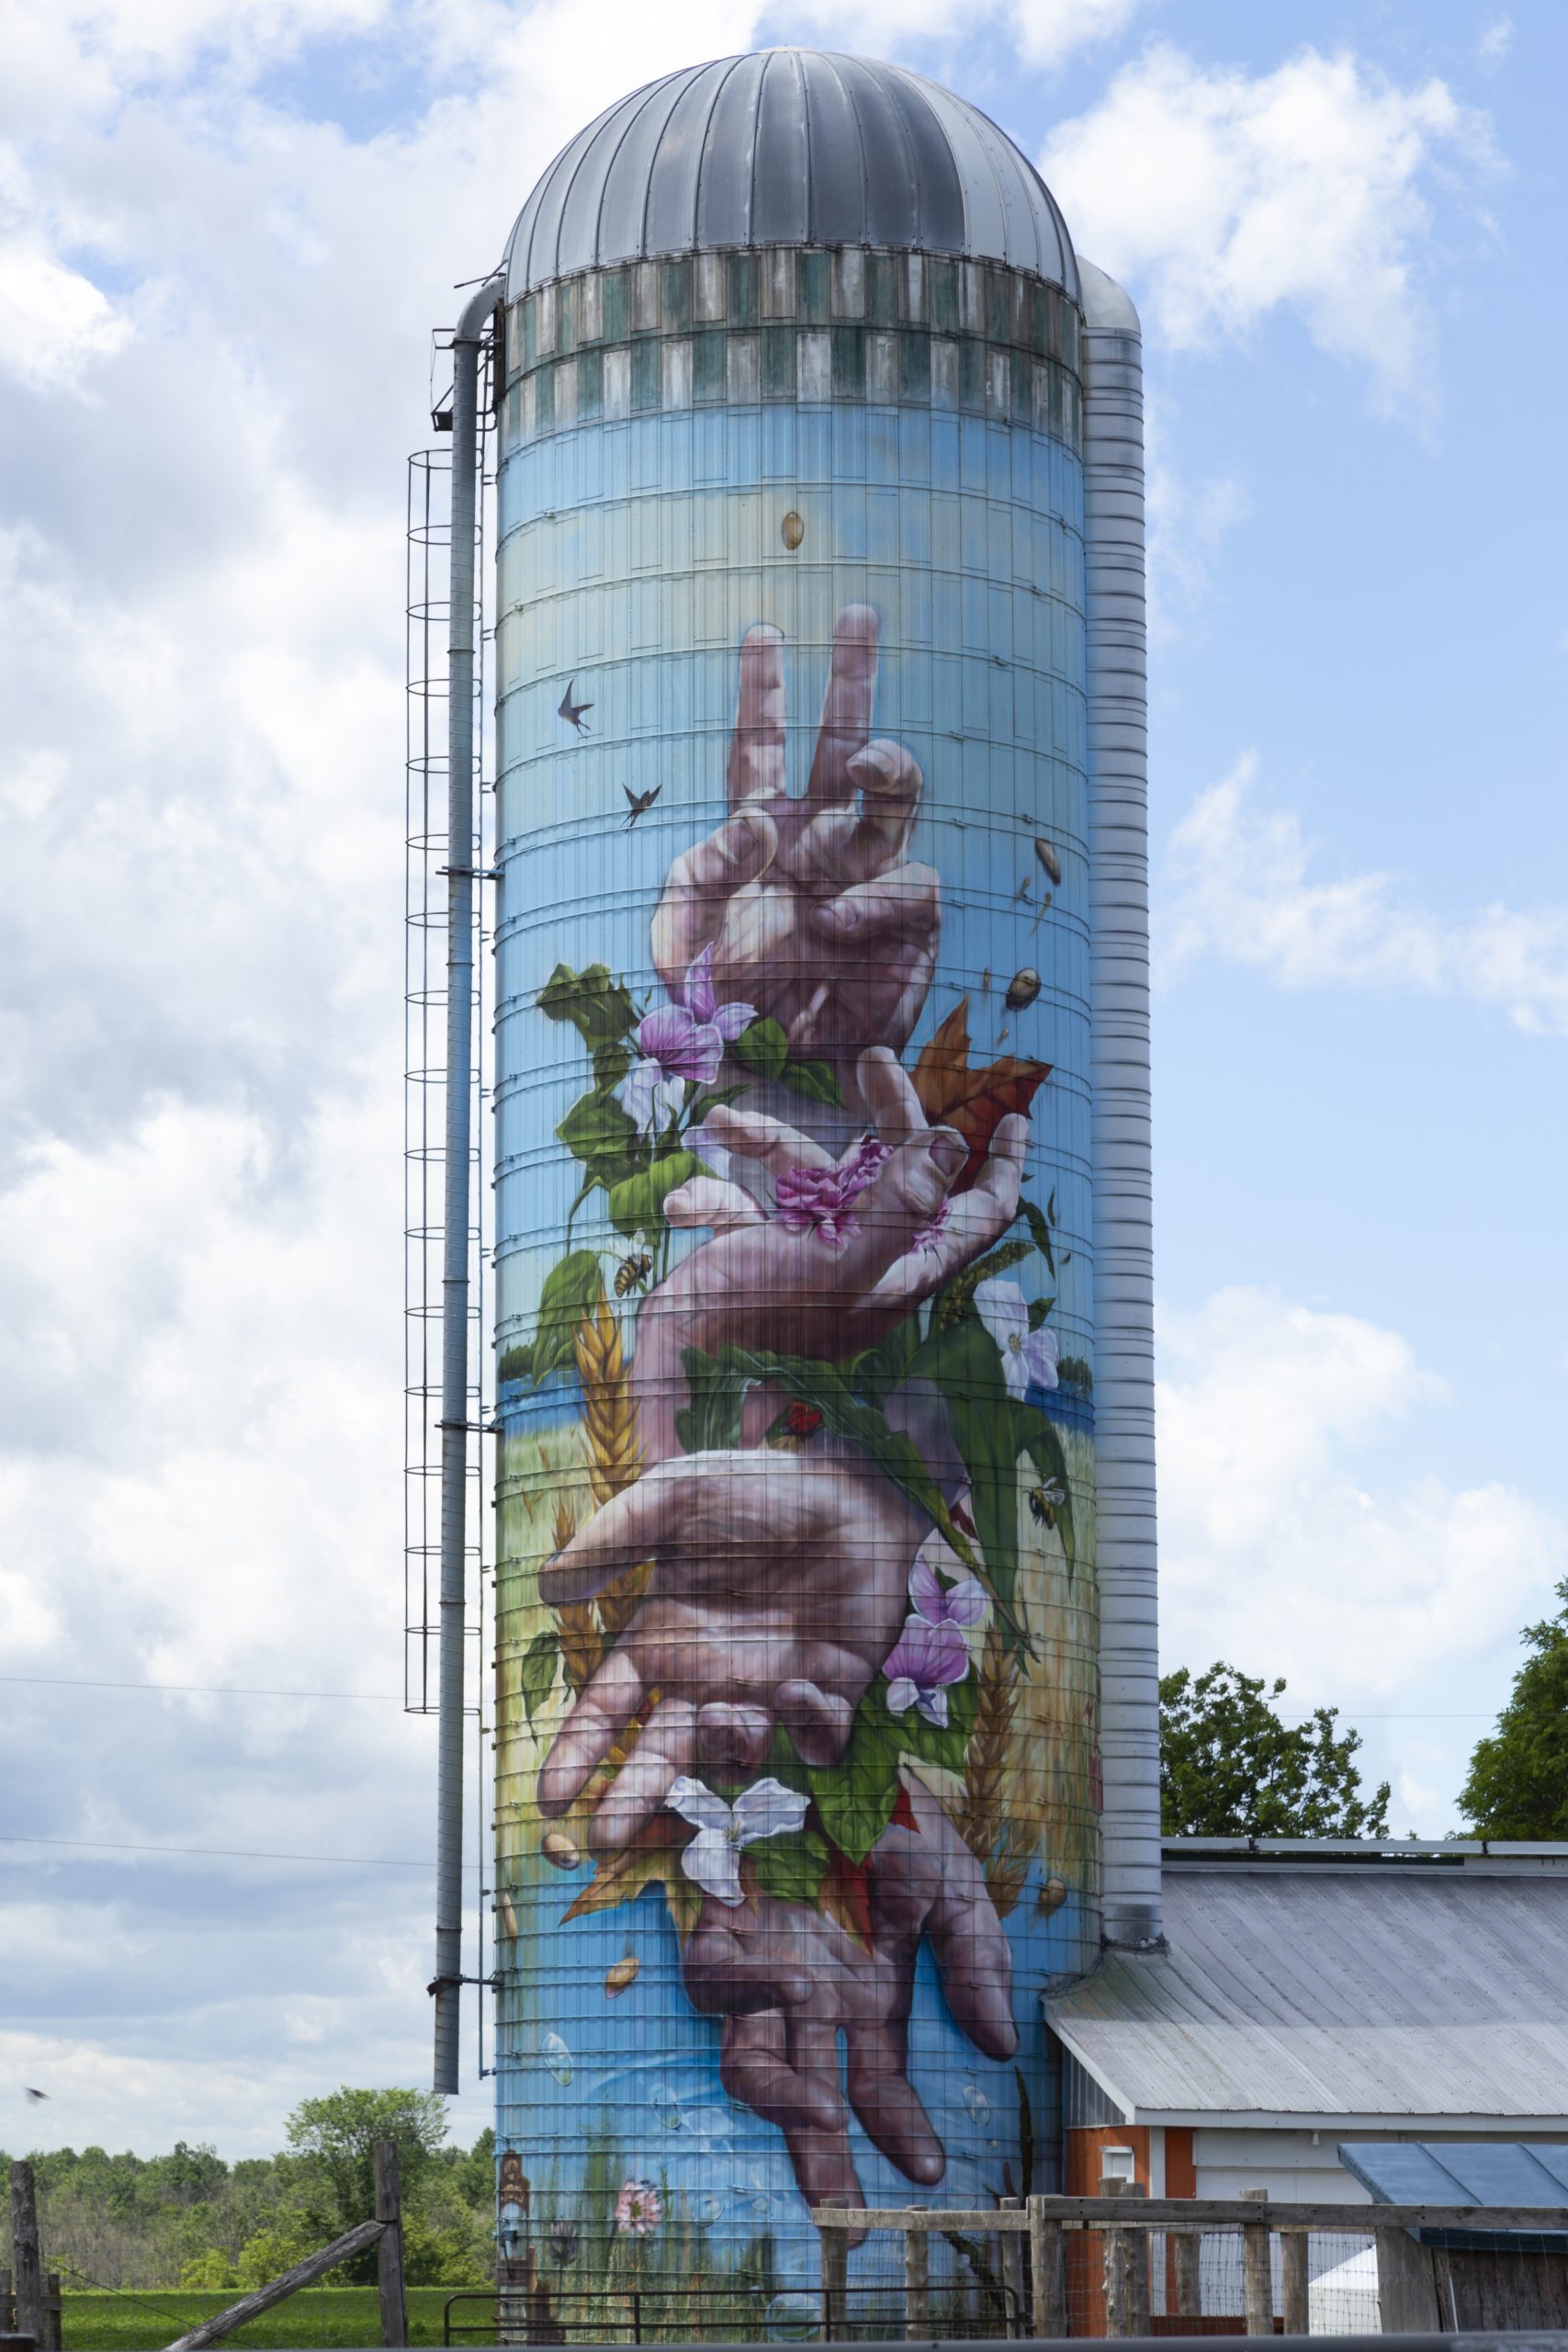 Farm silo painted by an artist